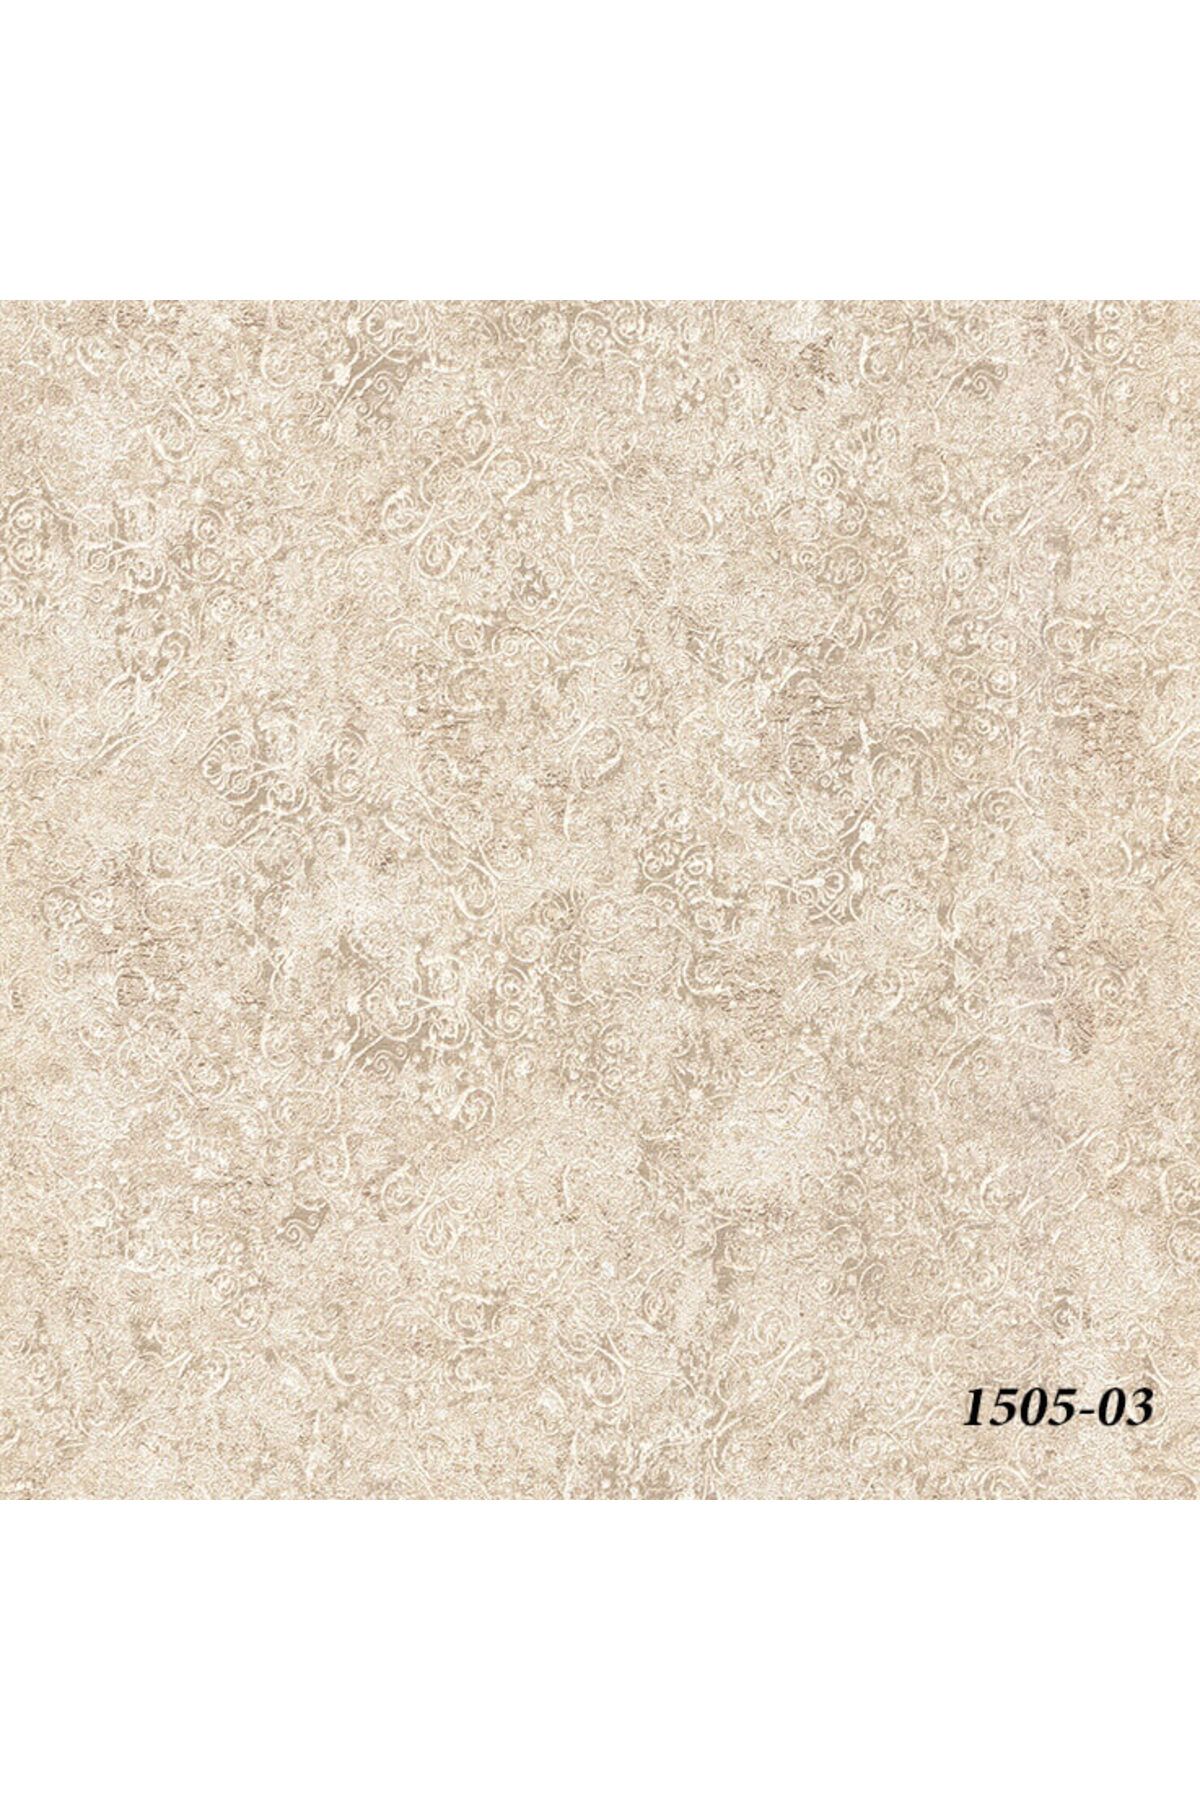 Decowall Orlando 1505-03 Retro Duvar Kağıdı